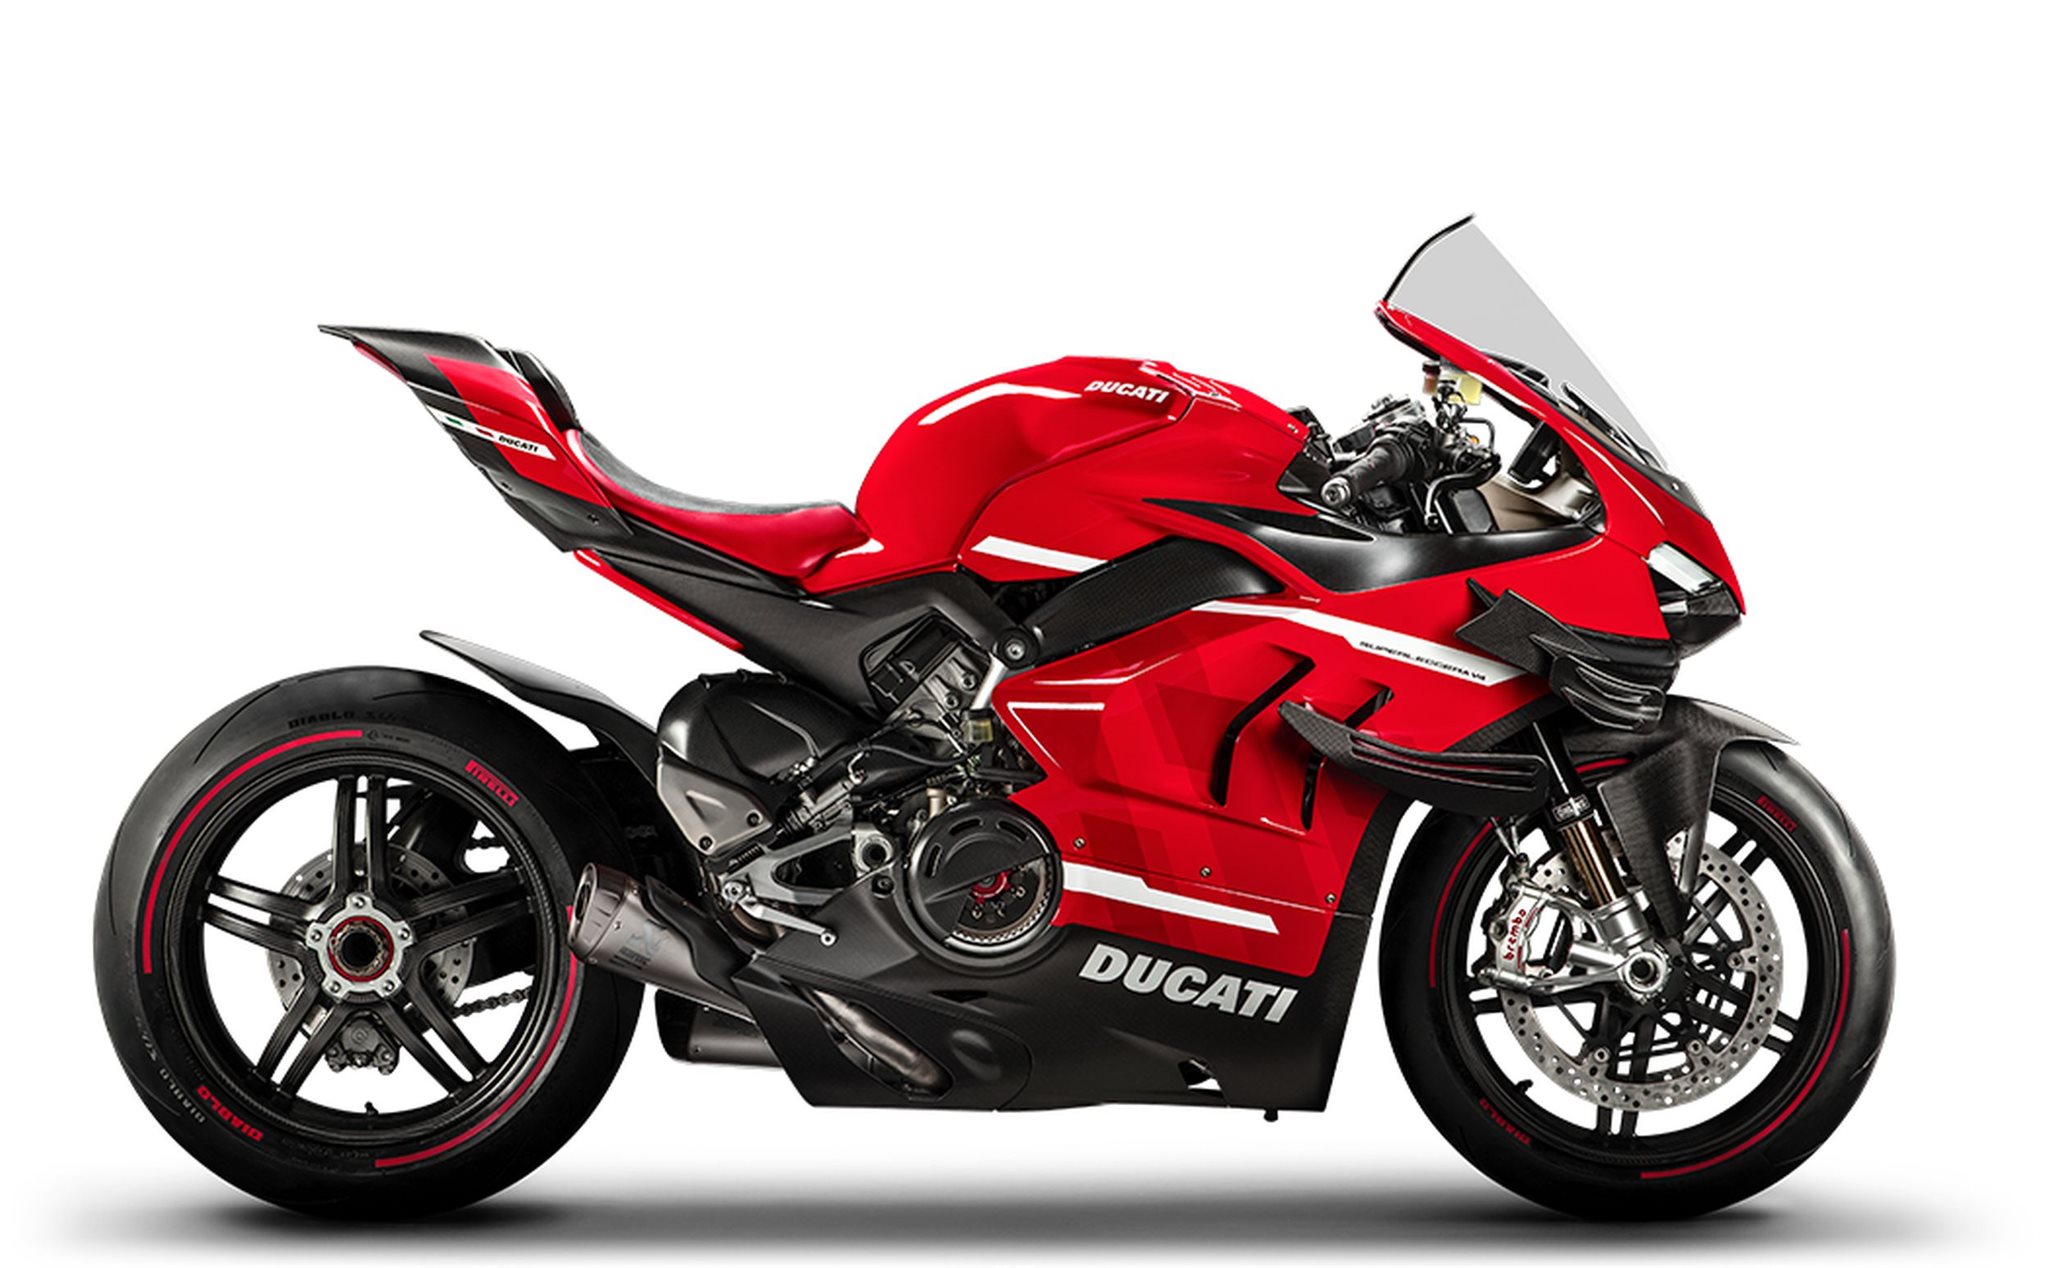 Мотоцикл Ducati Superleggera v4